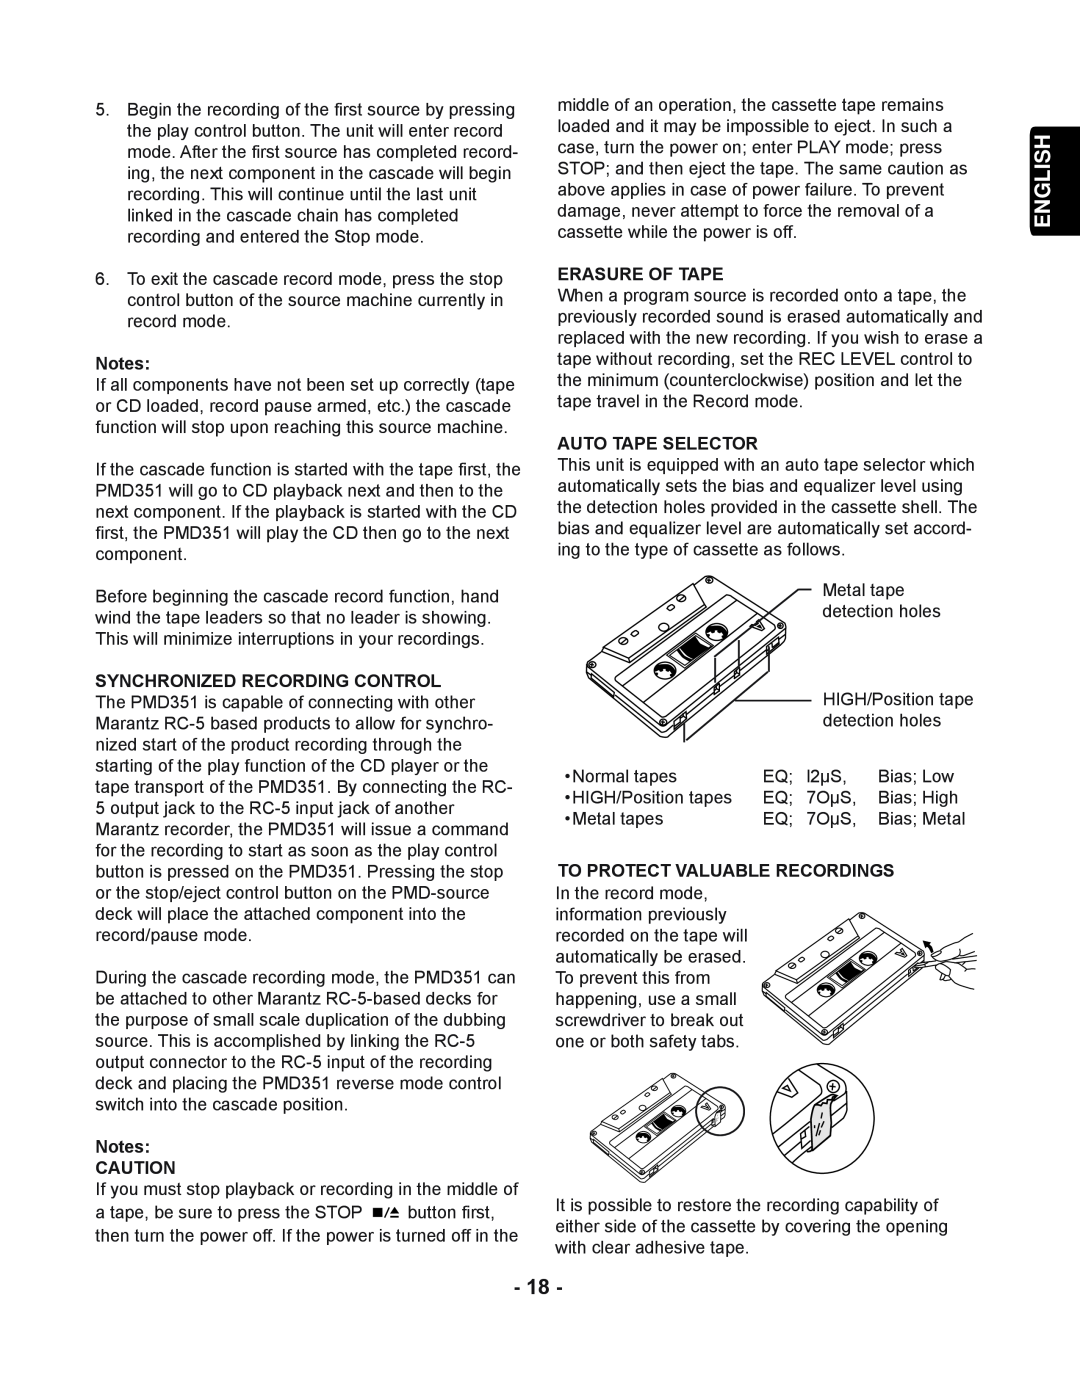 Marantz PMD351 manual English, Erasure Of Tape, Auto Tape Selector, To Protect Valuable Recordings 